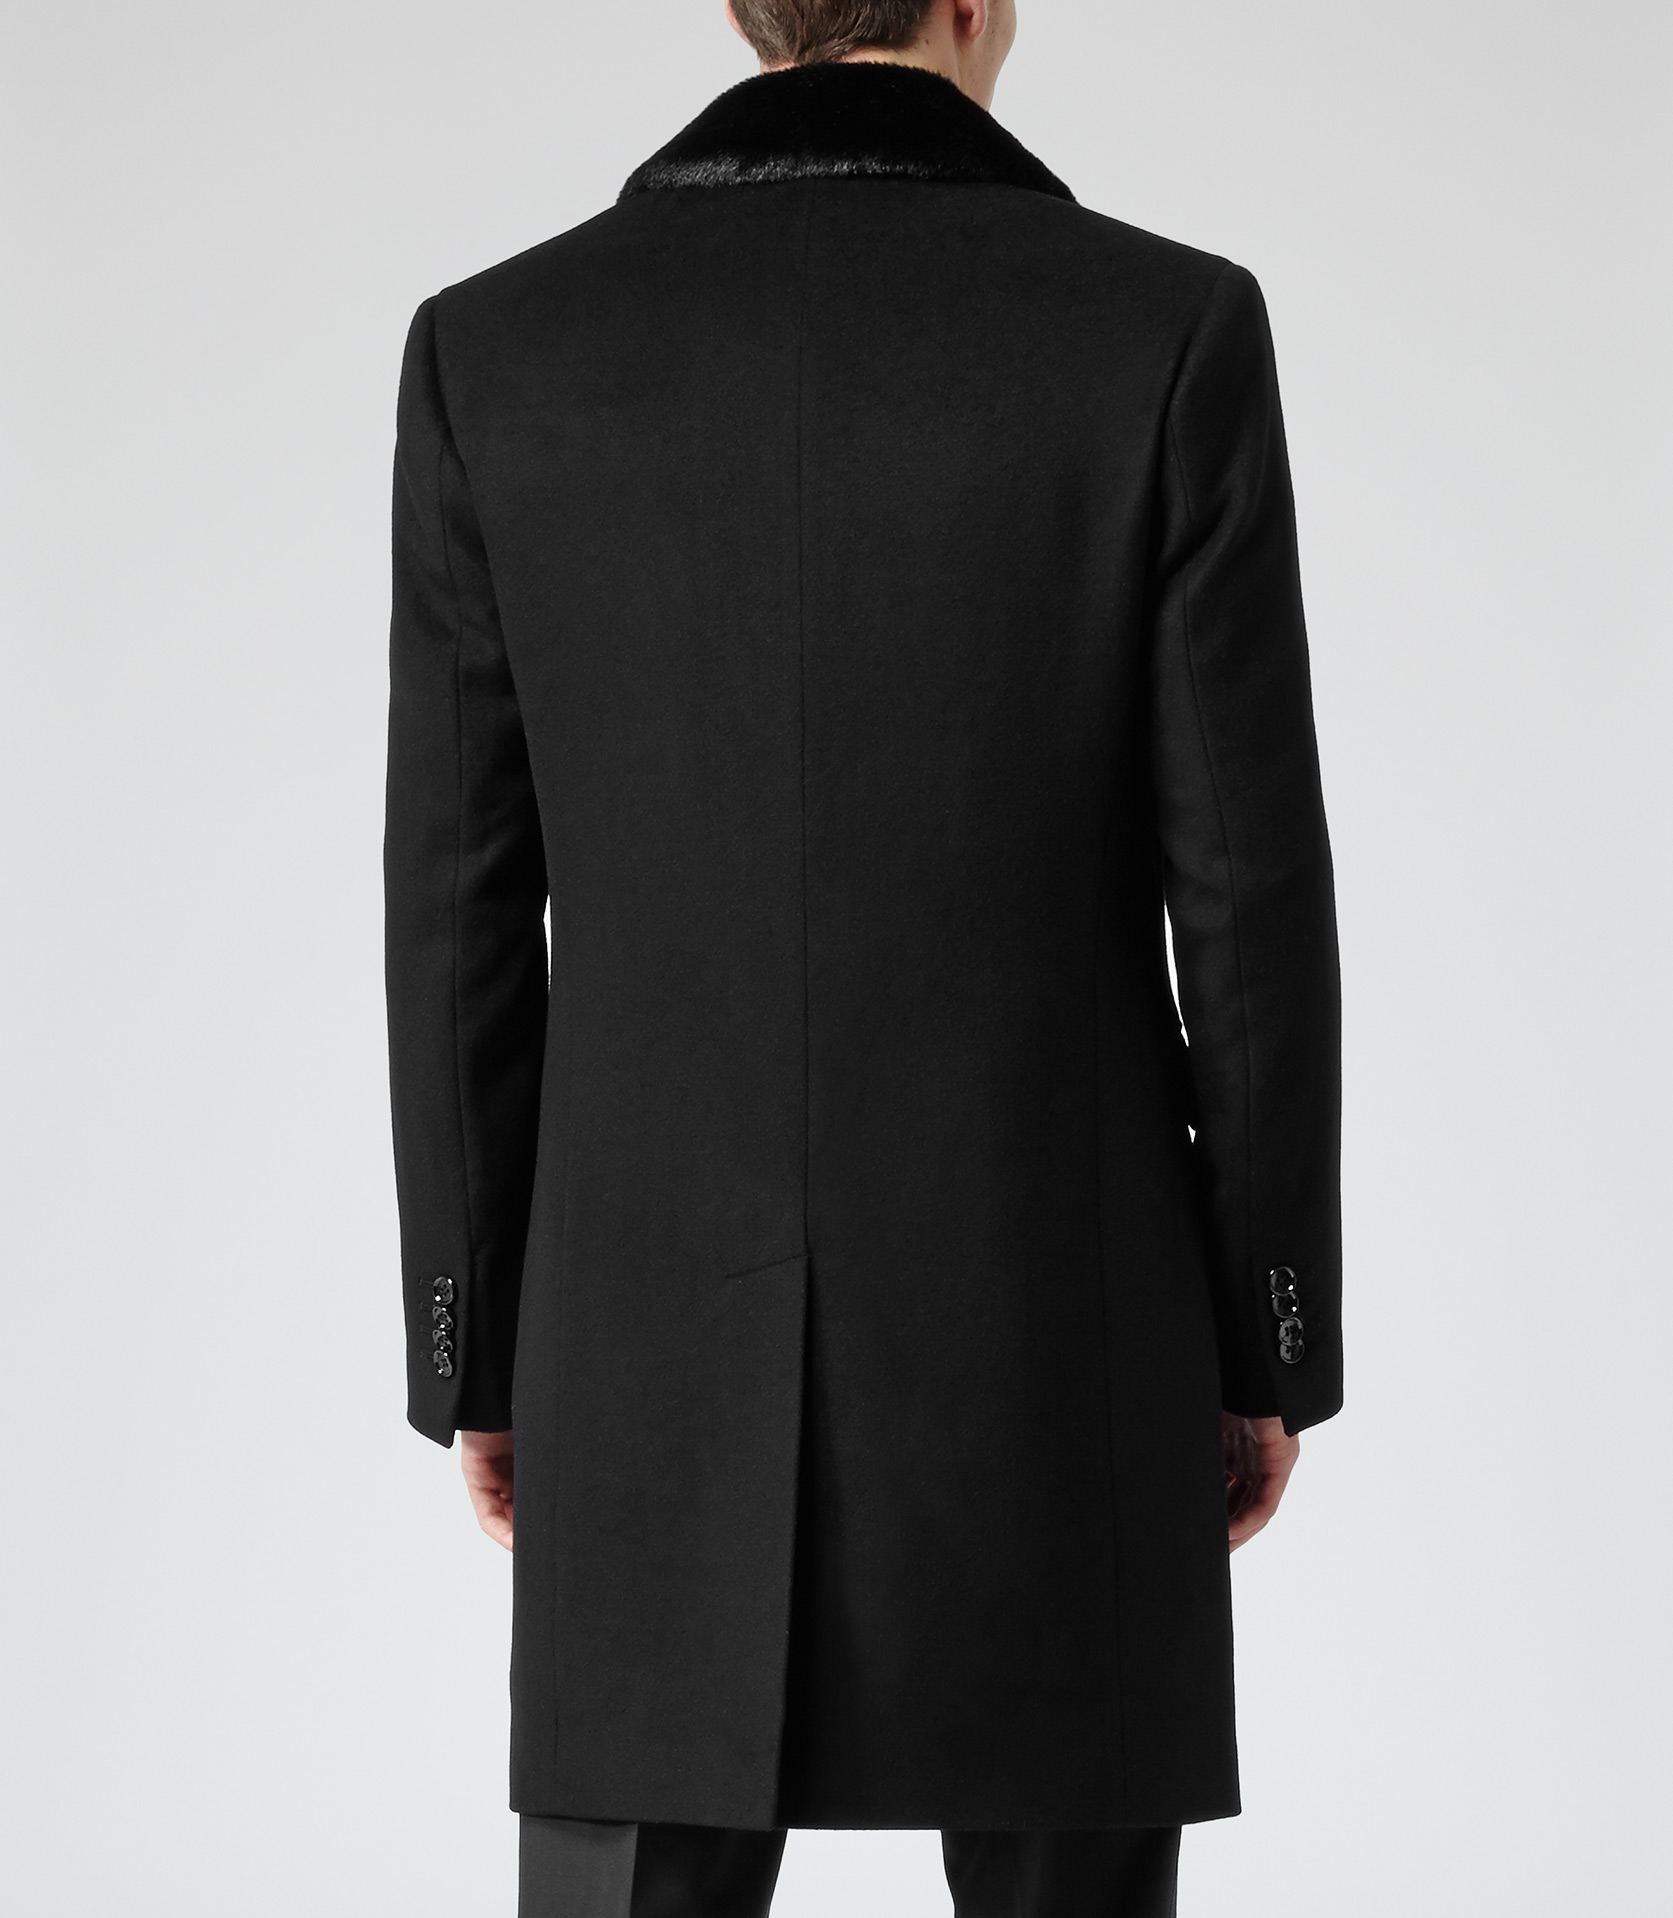 Lyst - Reiss King Faux Fur Collar Coat in Black for Men